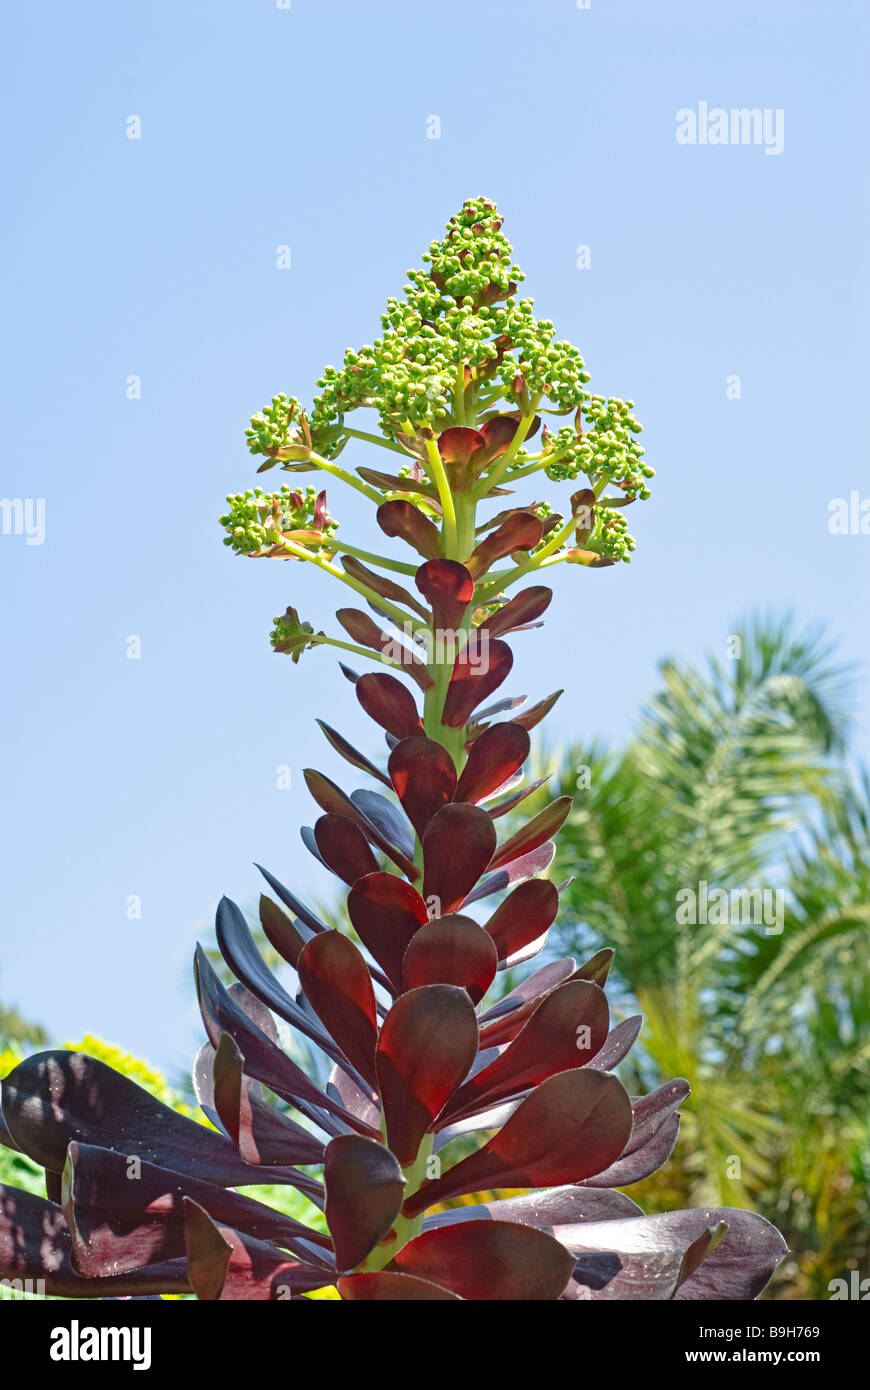 Aeonium cyclops plant, Giant Red Aeonium and flower Stock Photo